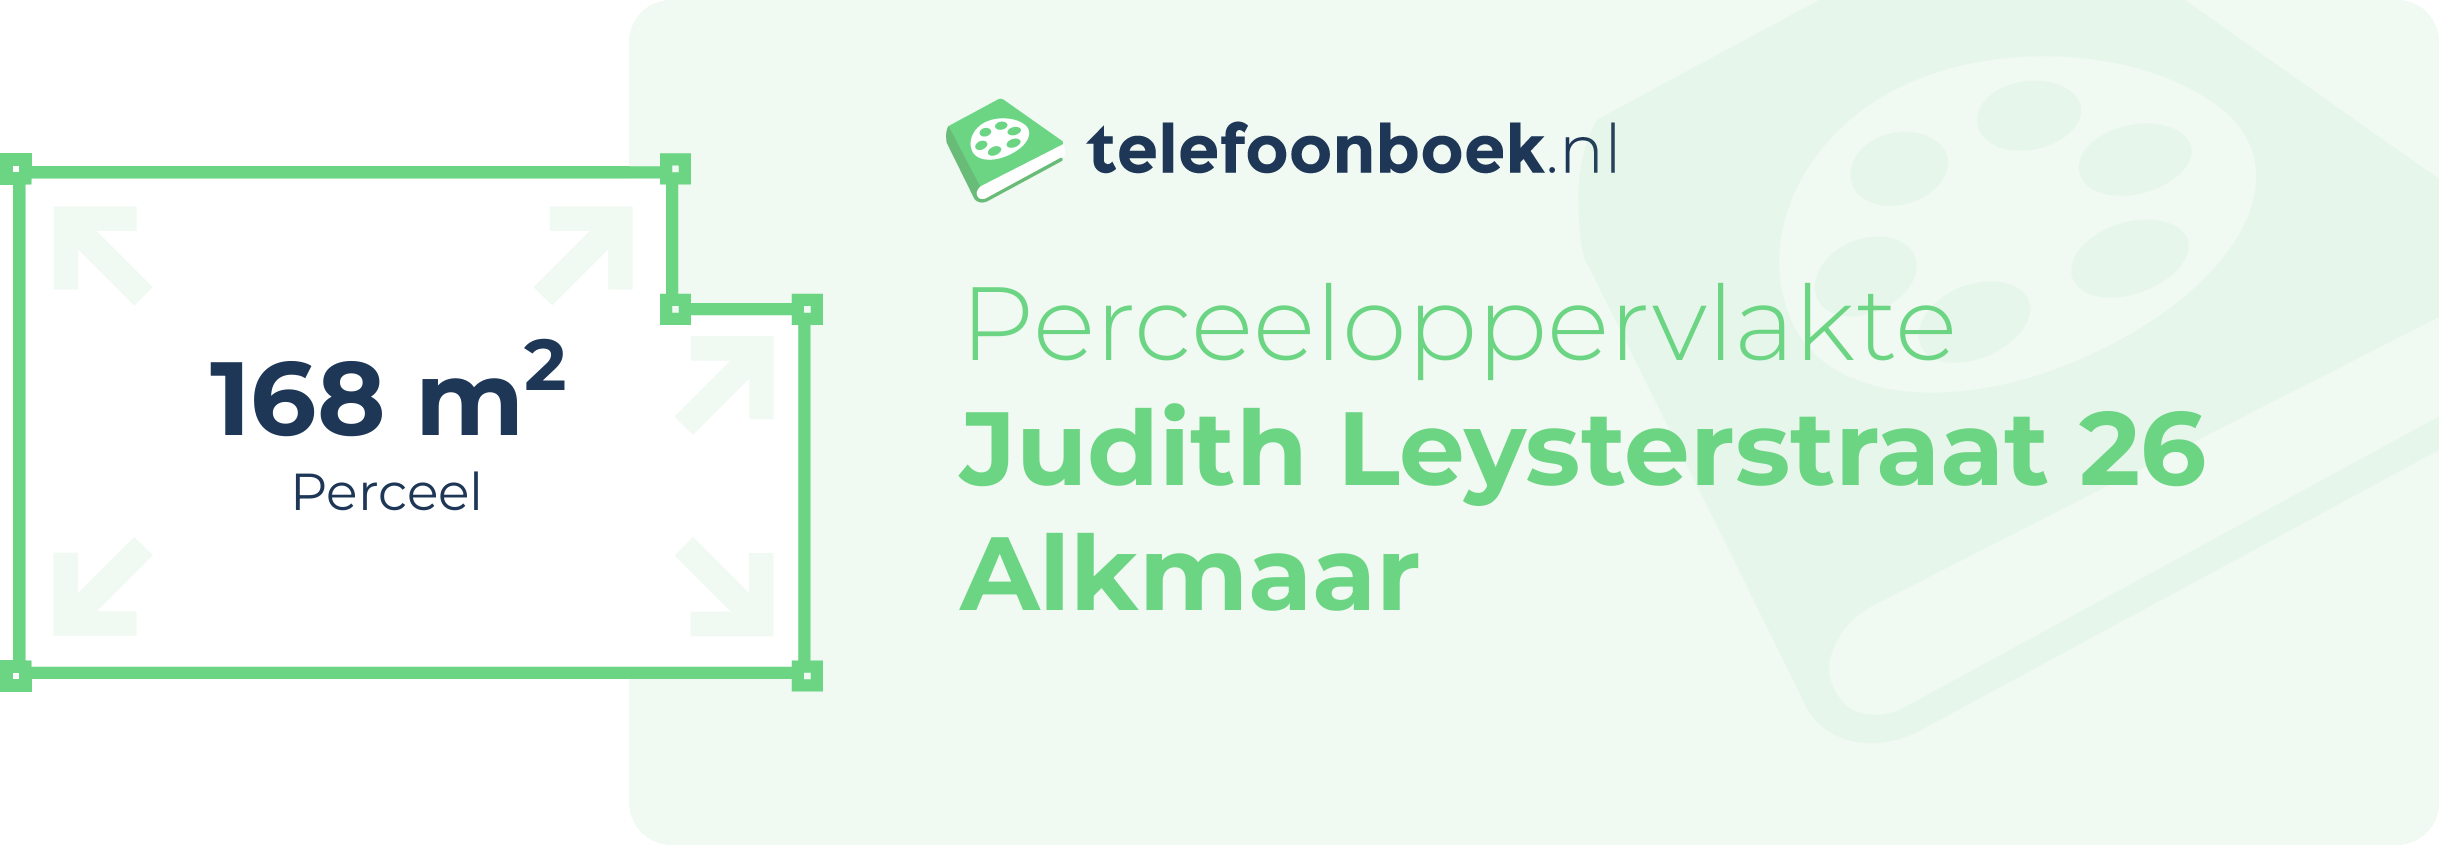 Perceeloppervlakte Judith Leysterstraat 26 Alkmaar